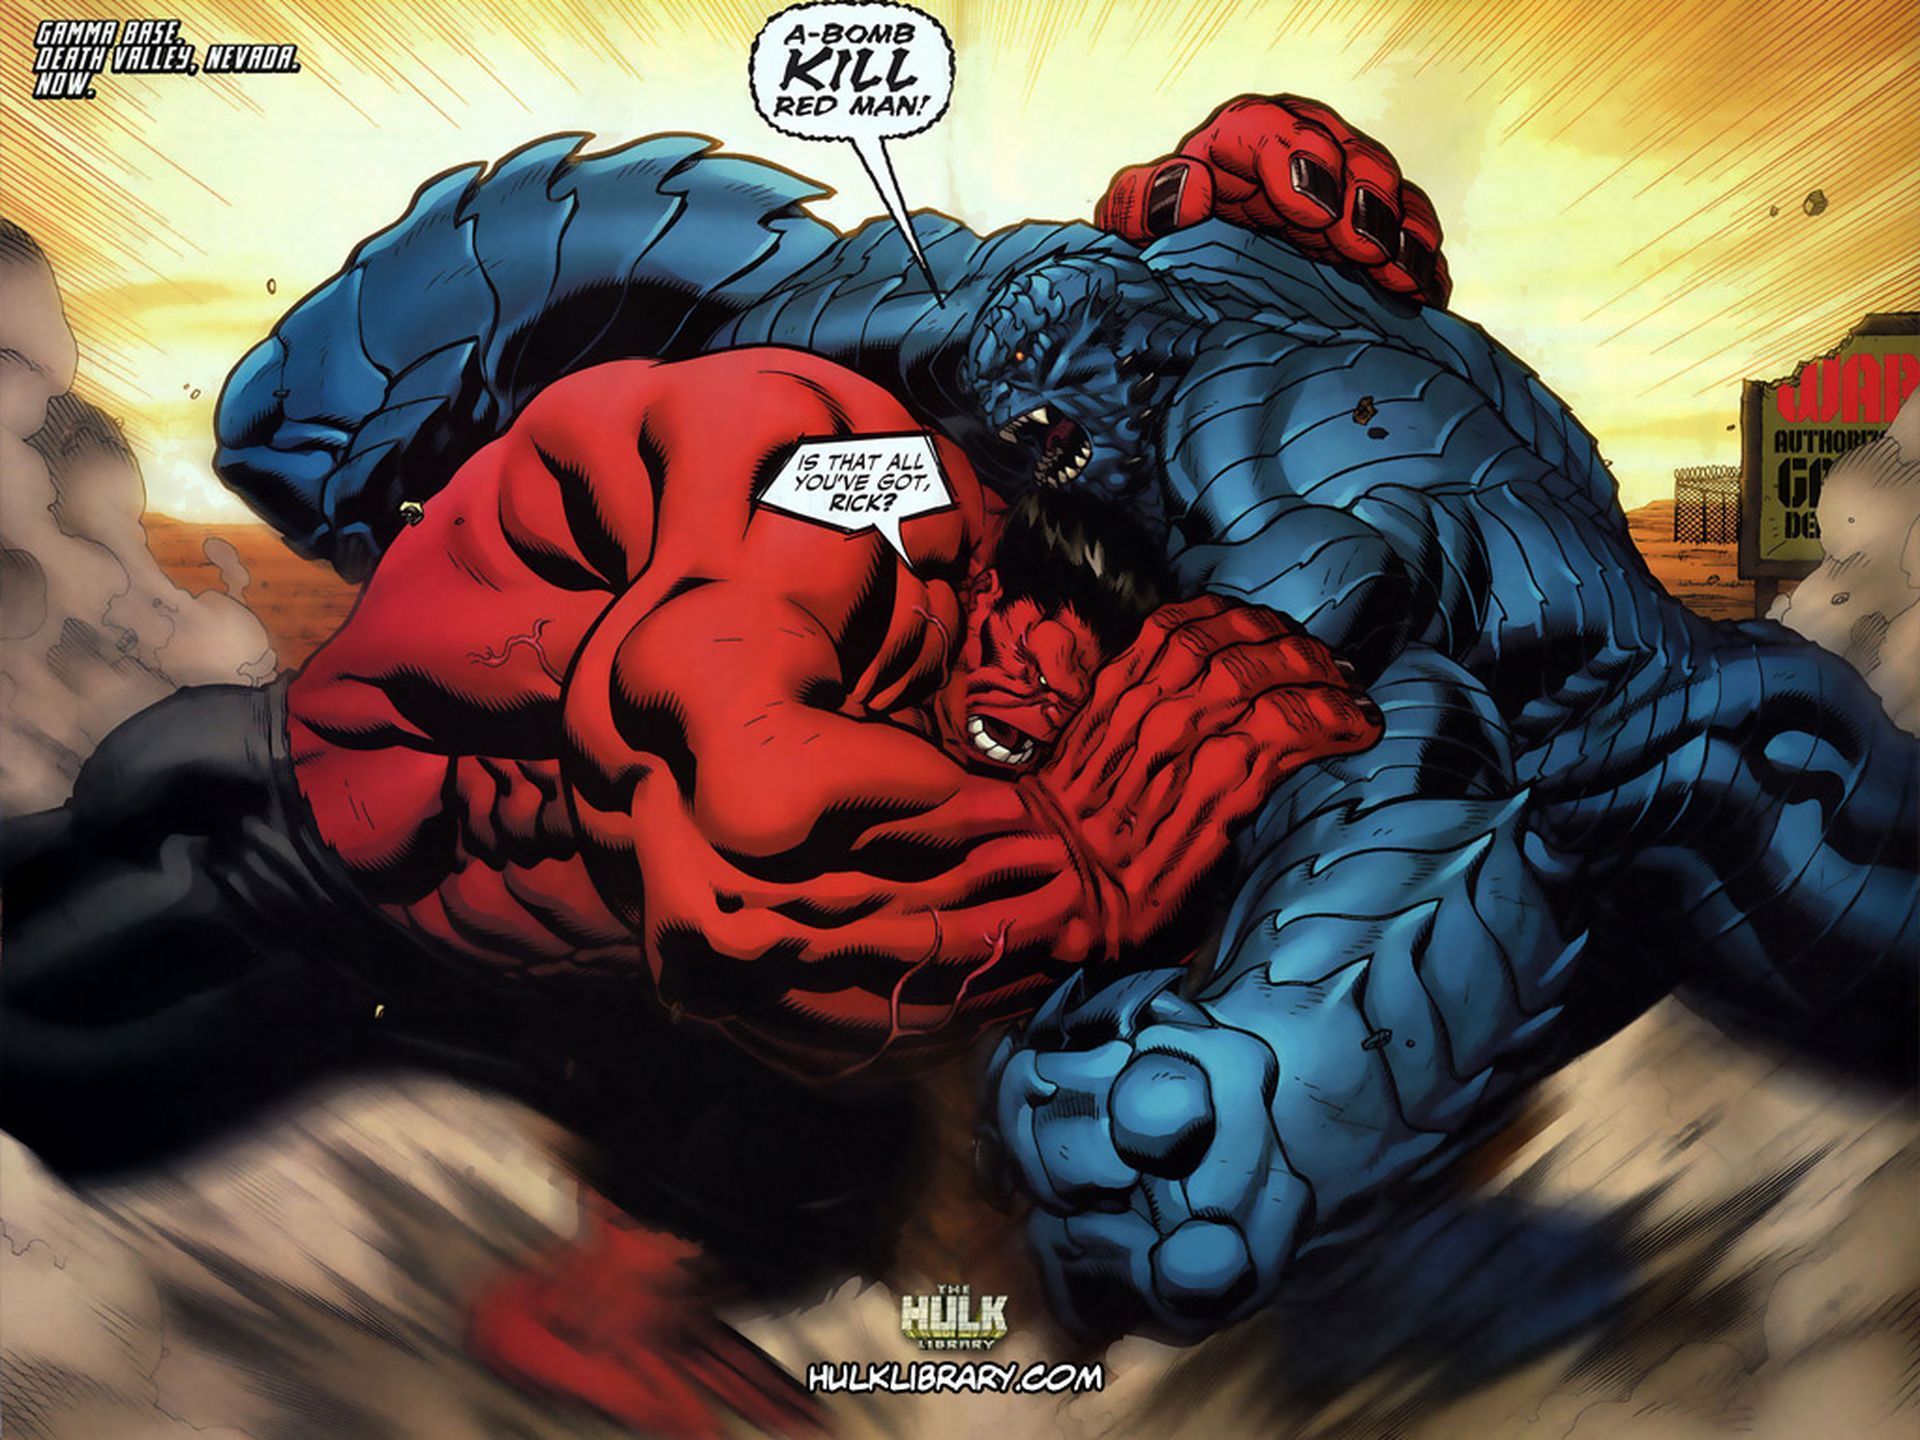 Red hulk vs Abomination. Red hulk, Hulk, Hulk art